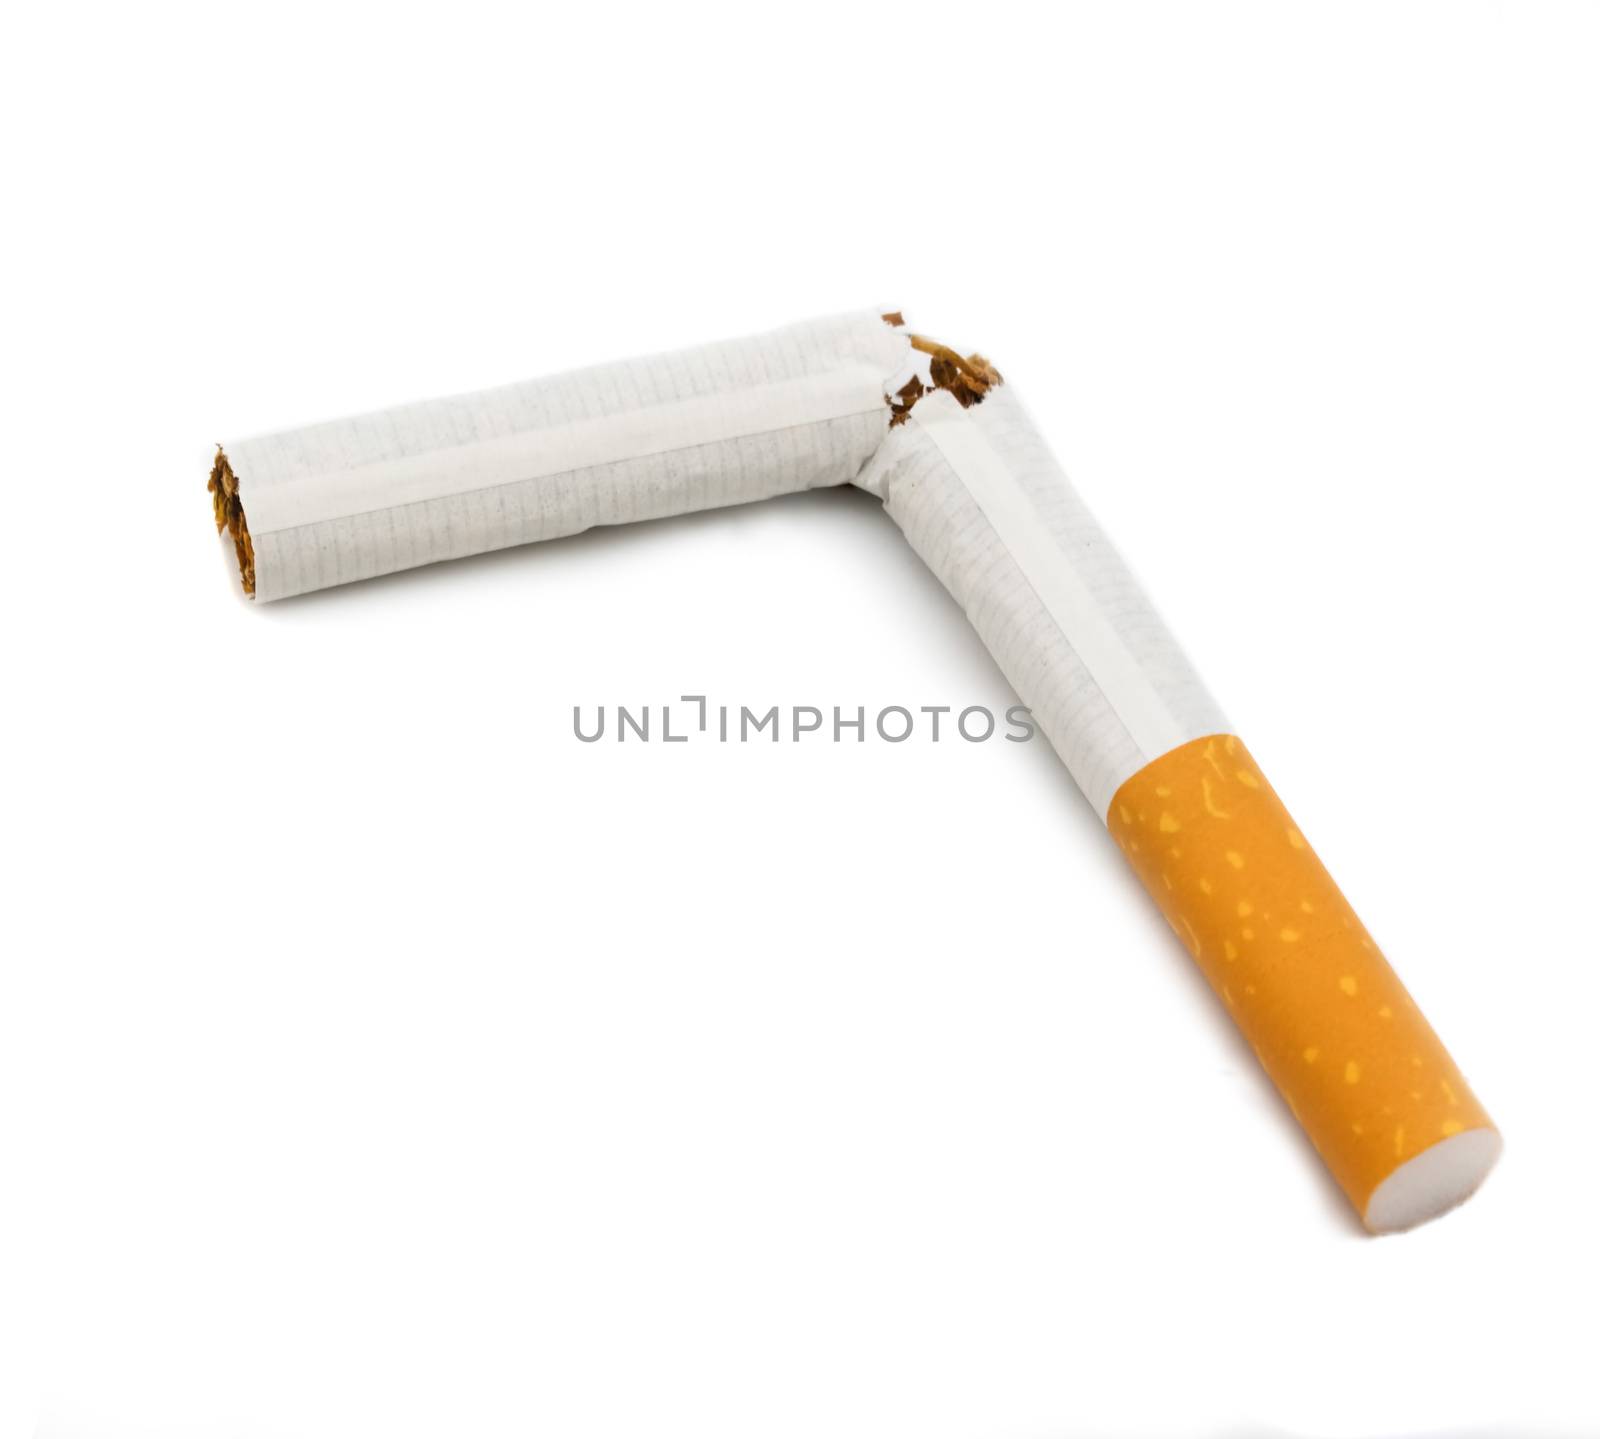 Broken cigarette isolated on white background